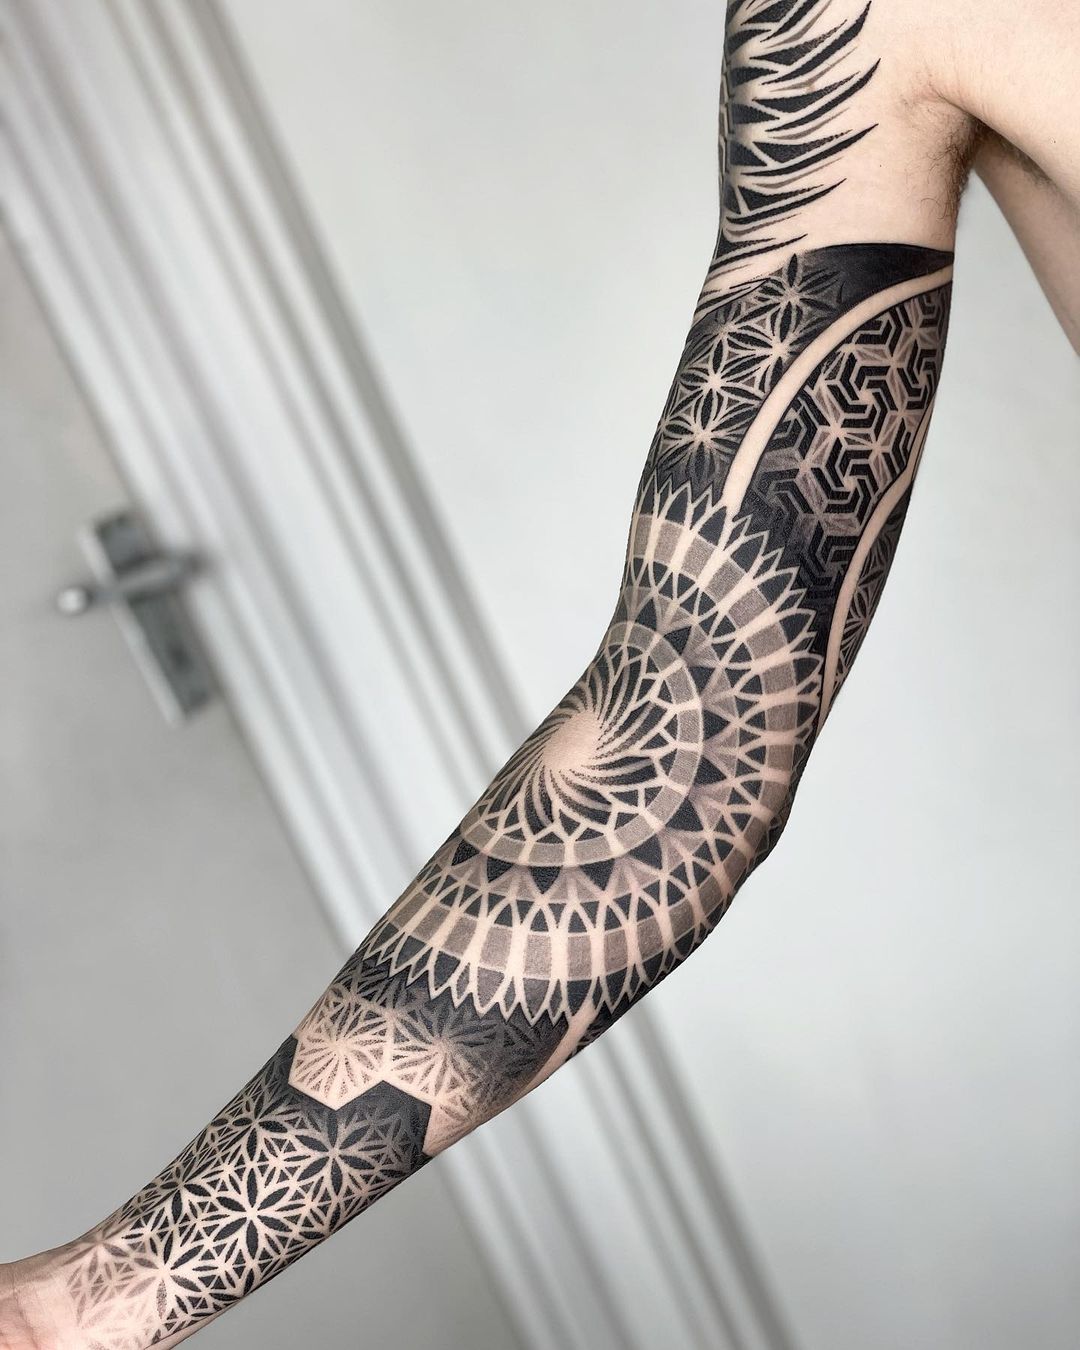 Tattoo uploaded by Tattoodo • Blackwork tattoo sleeve by Samuel Christensen  #samuelchristensen #blackwork #geometric #southpacific #maori #polynesian  #samoan #tribal #dotwork • Tattoodo